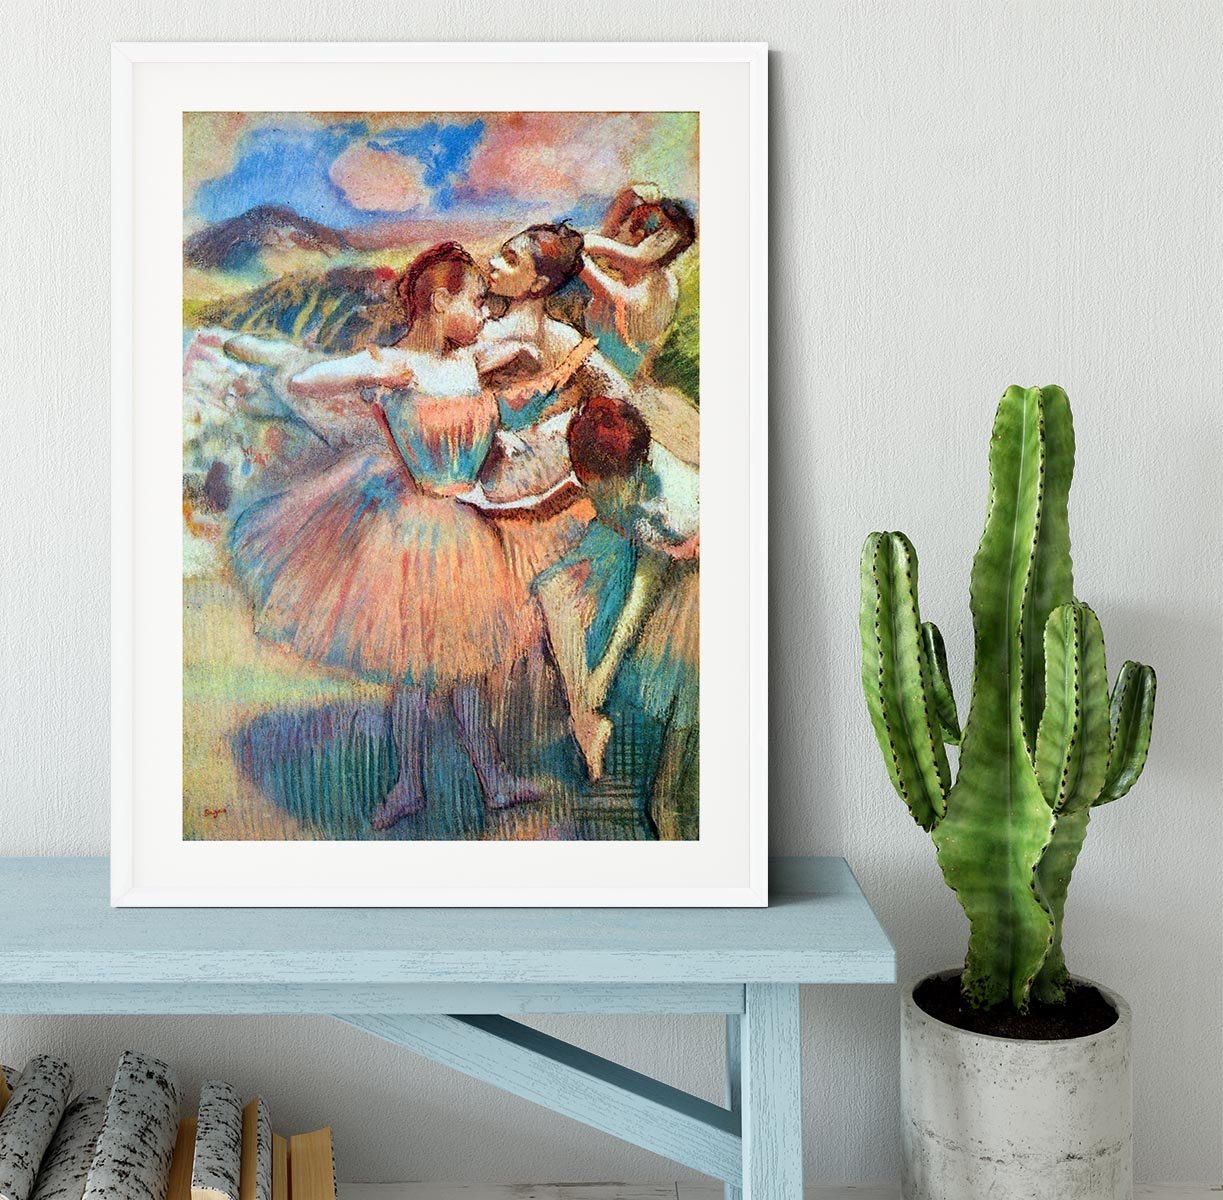 Dancers in the landscape by Degas Framed Print - Canvas Art Rocks - 5